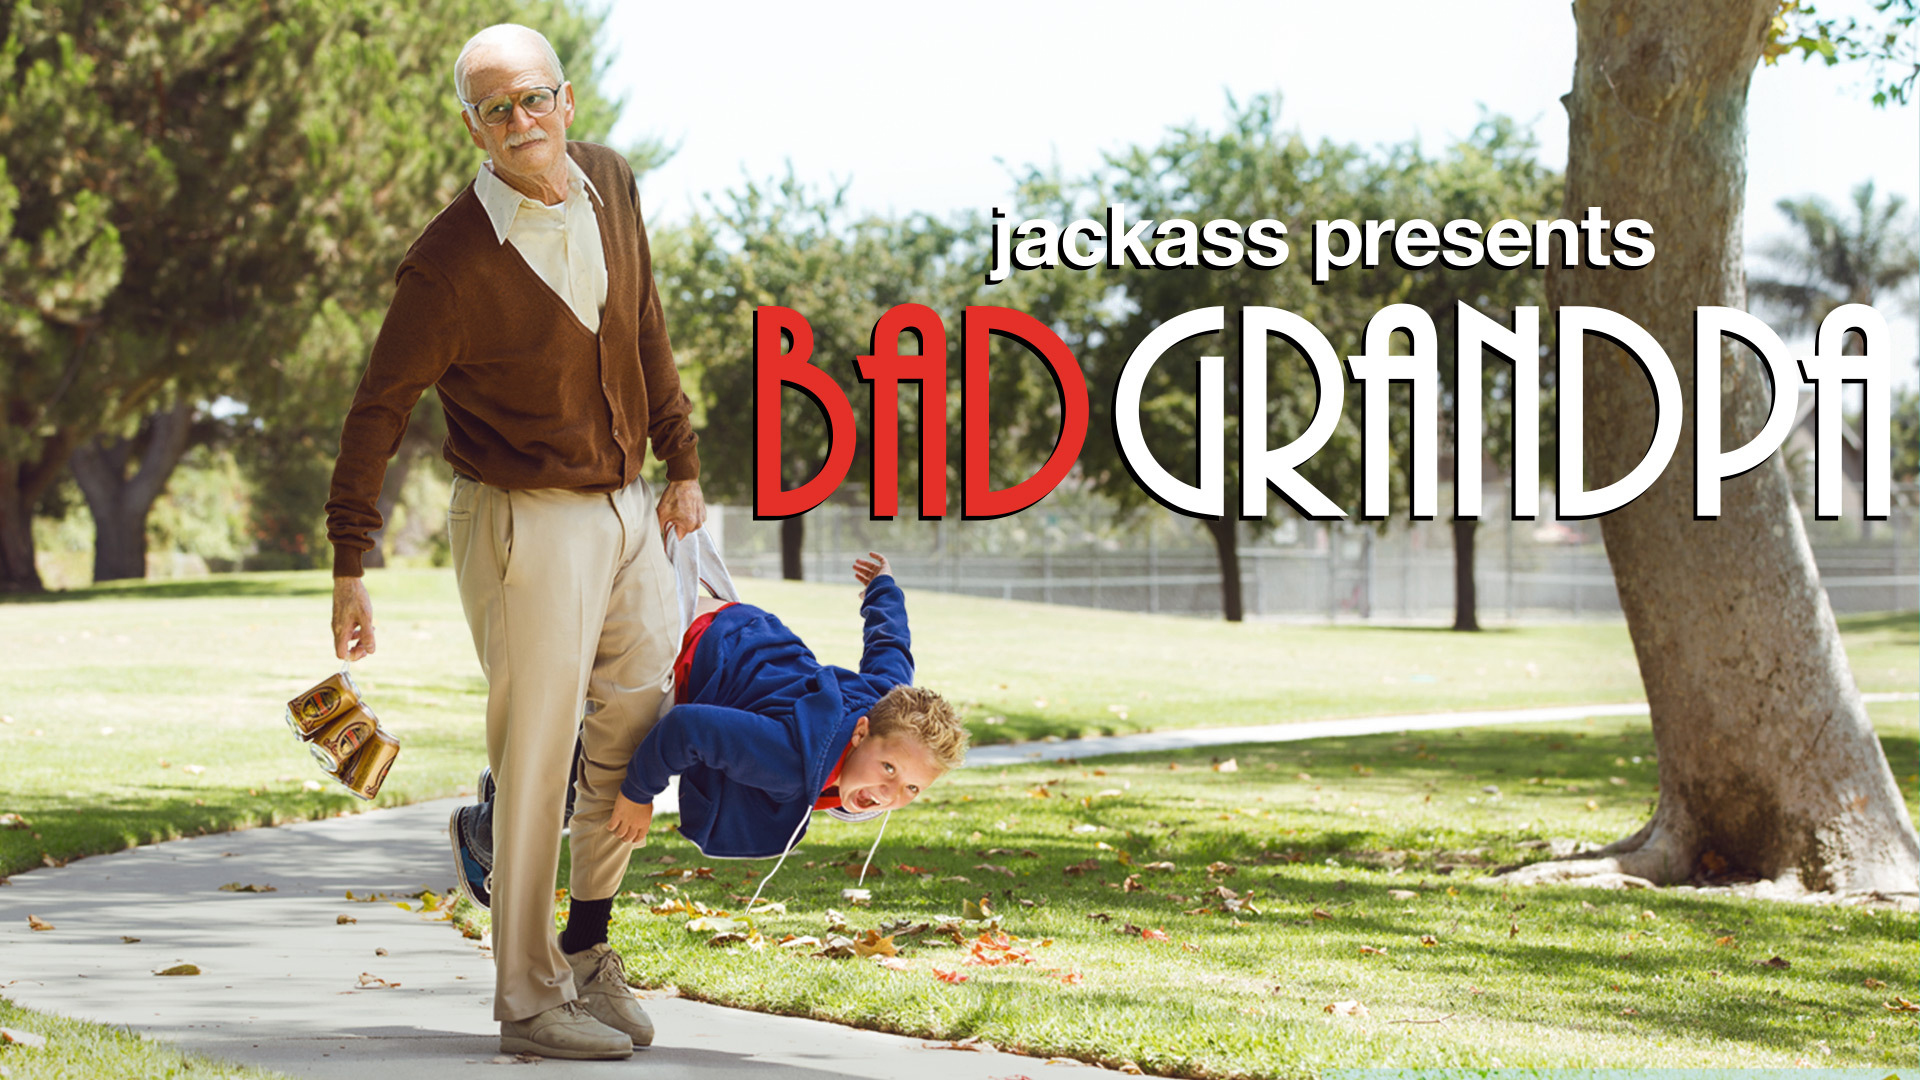 Bad Grandpa